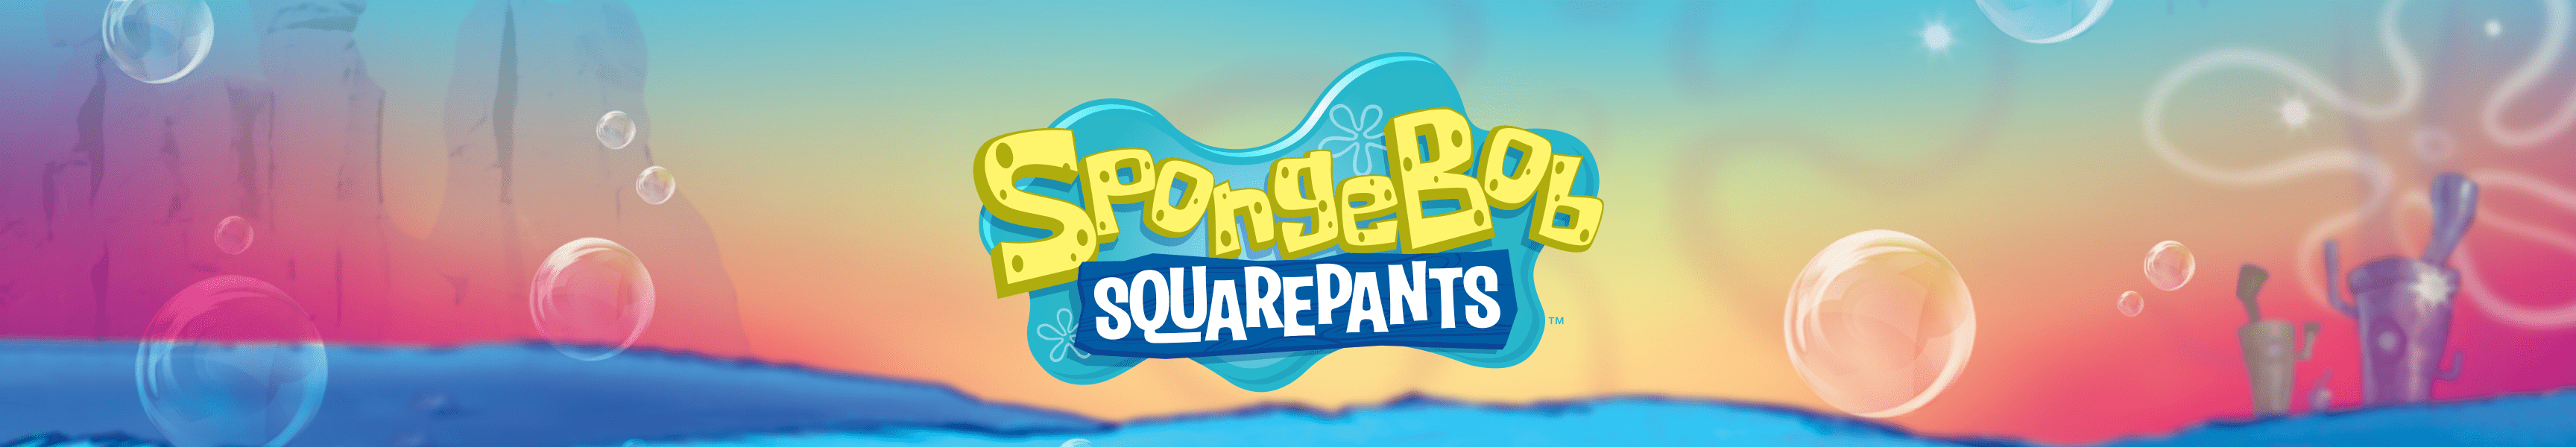 SpongeBob SquarePants Gifts for Superfans